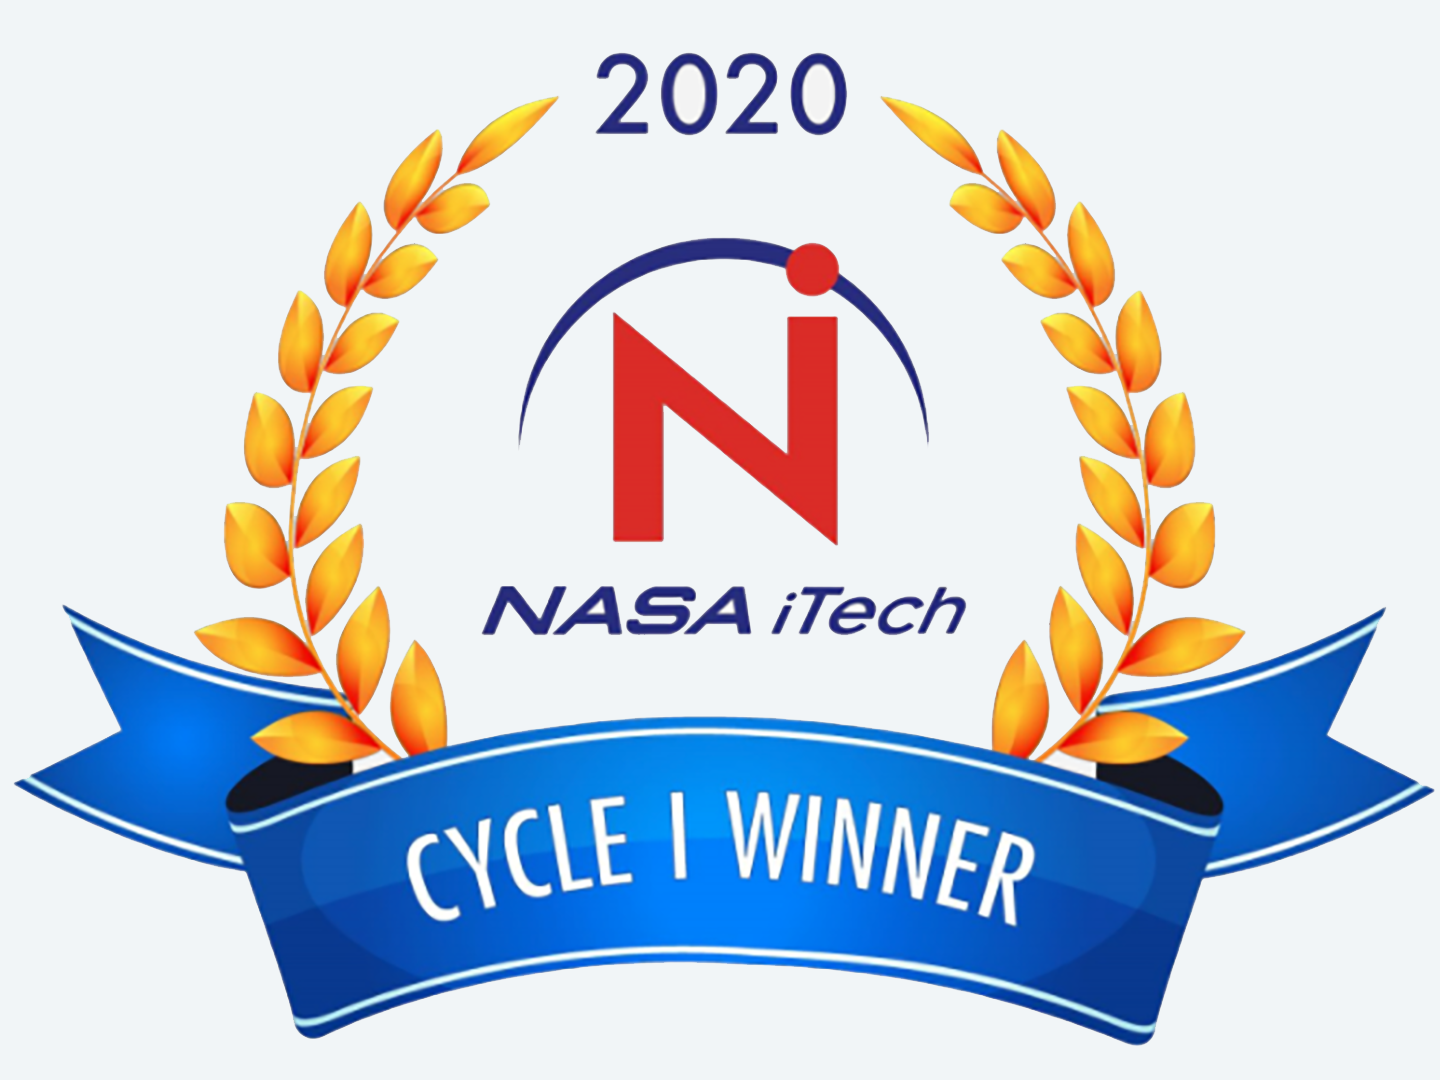 NASA iTech 2020 Cycle 1 Winner